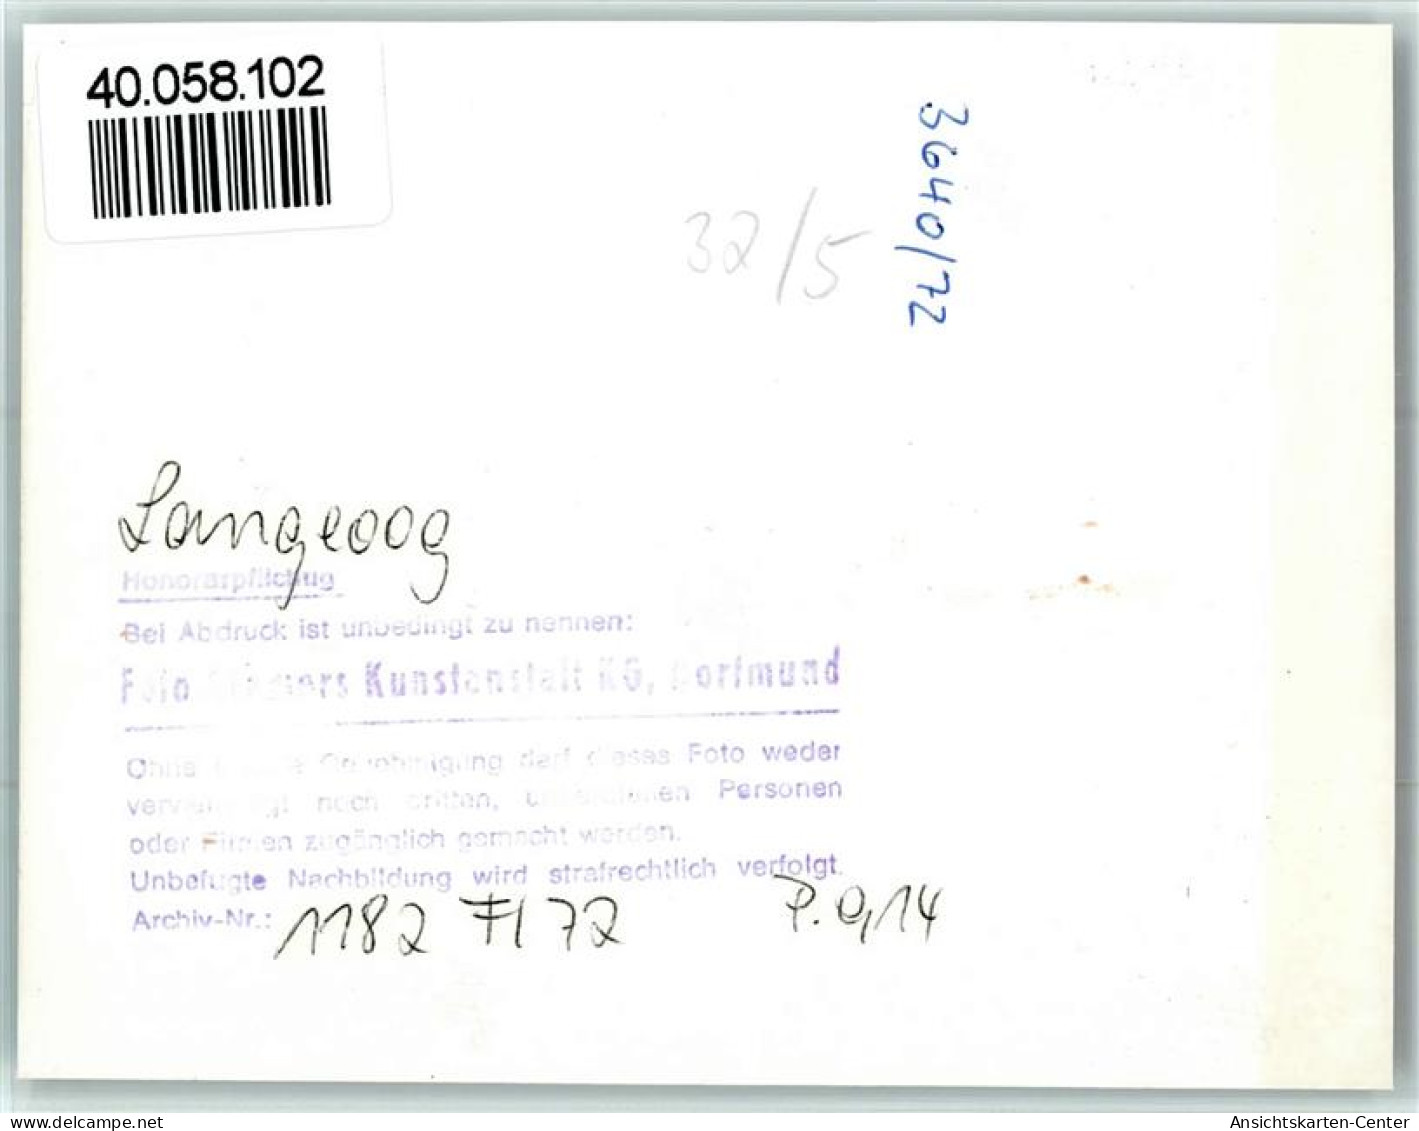 40058102 - Langeoog - Langeoog